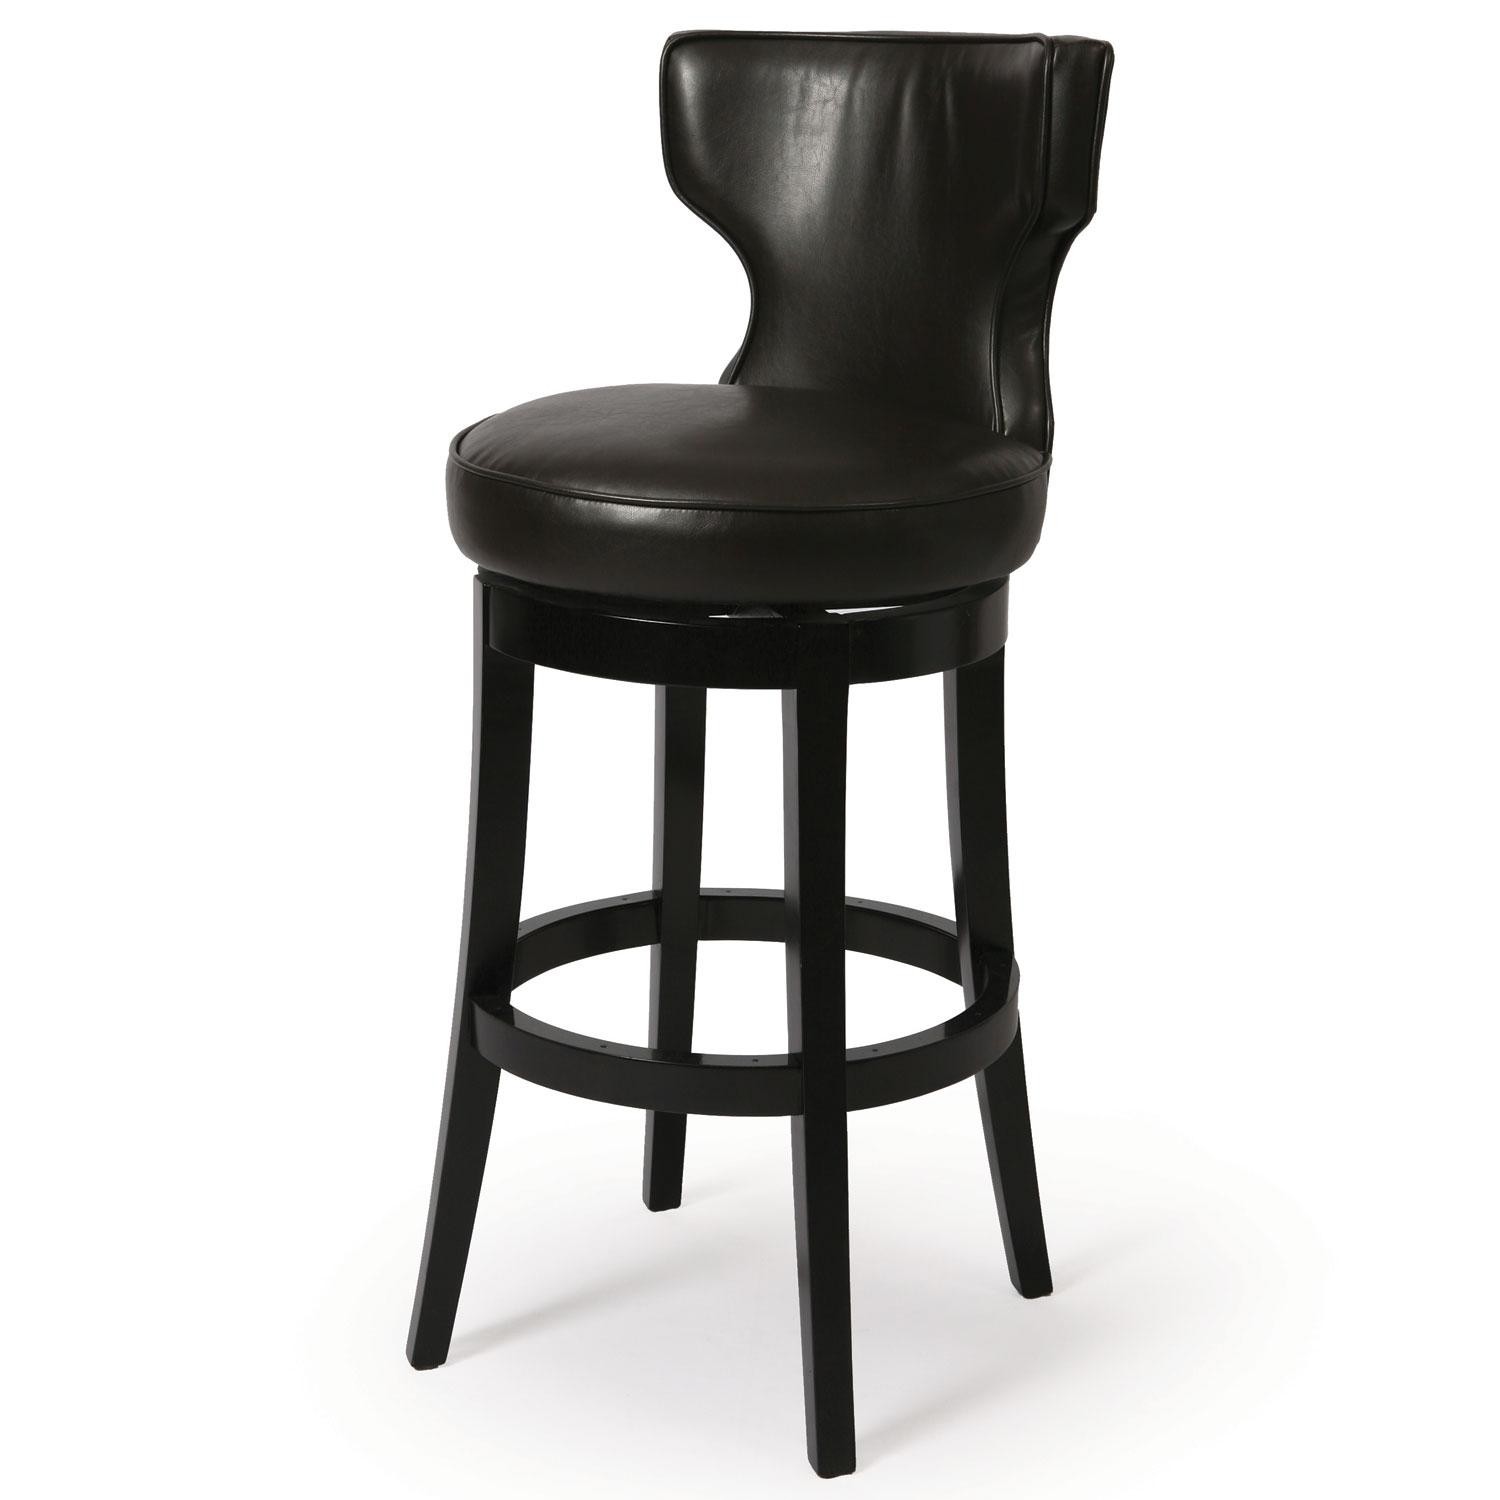 Augusta brown bonded leather swivel bar stool